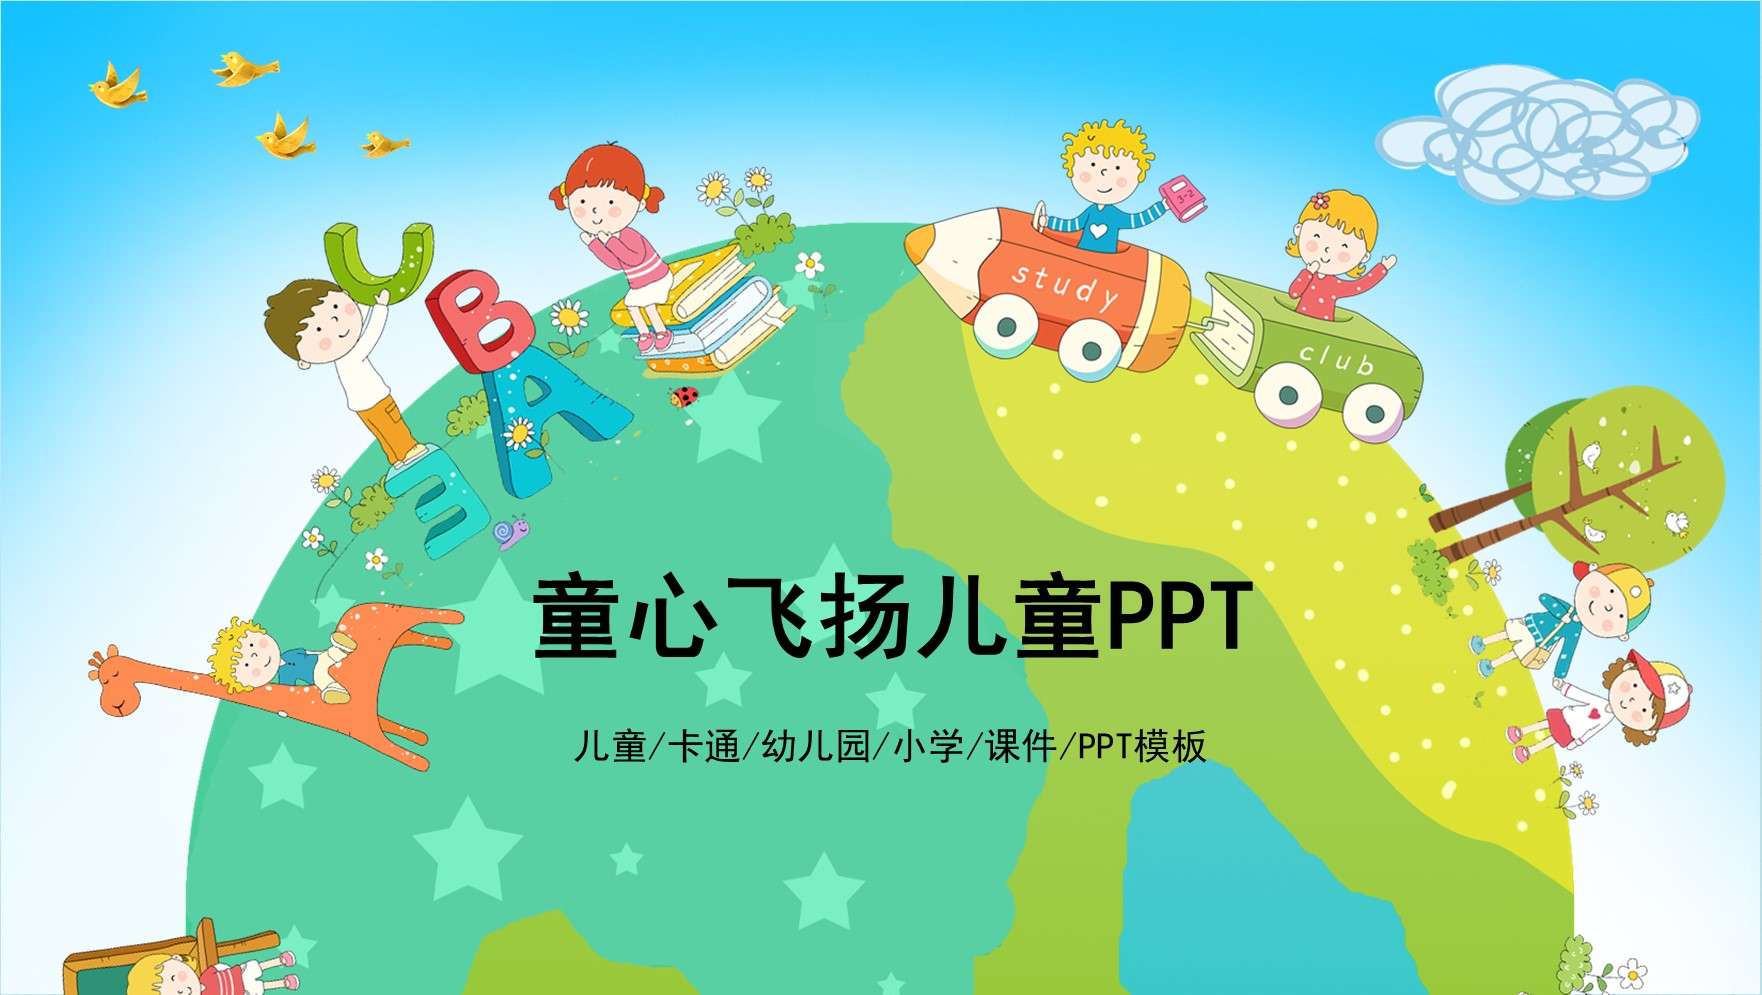 Childlike innocence flying kindergarten children's cartoon courseware PPT template